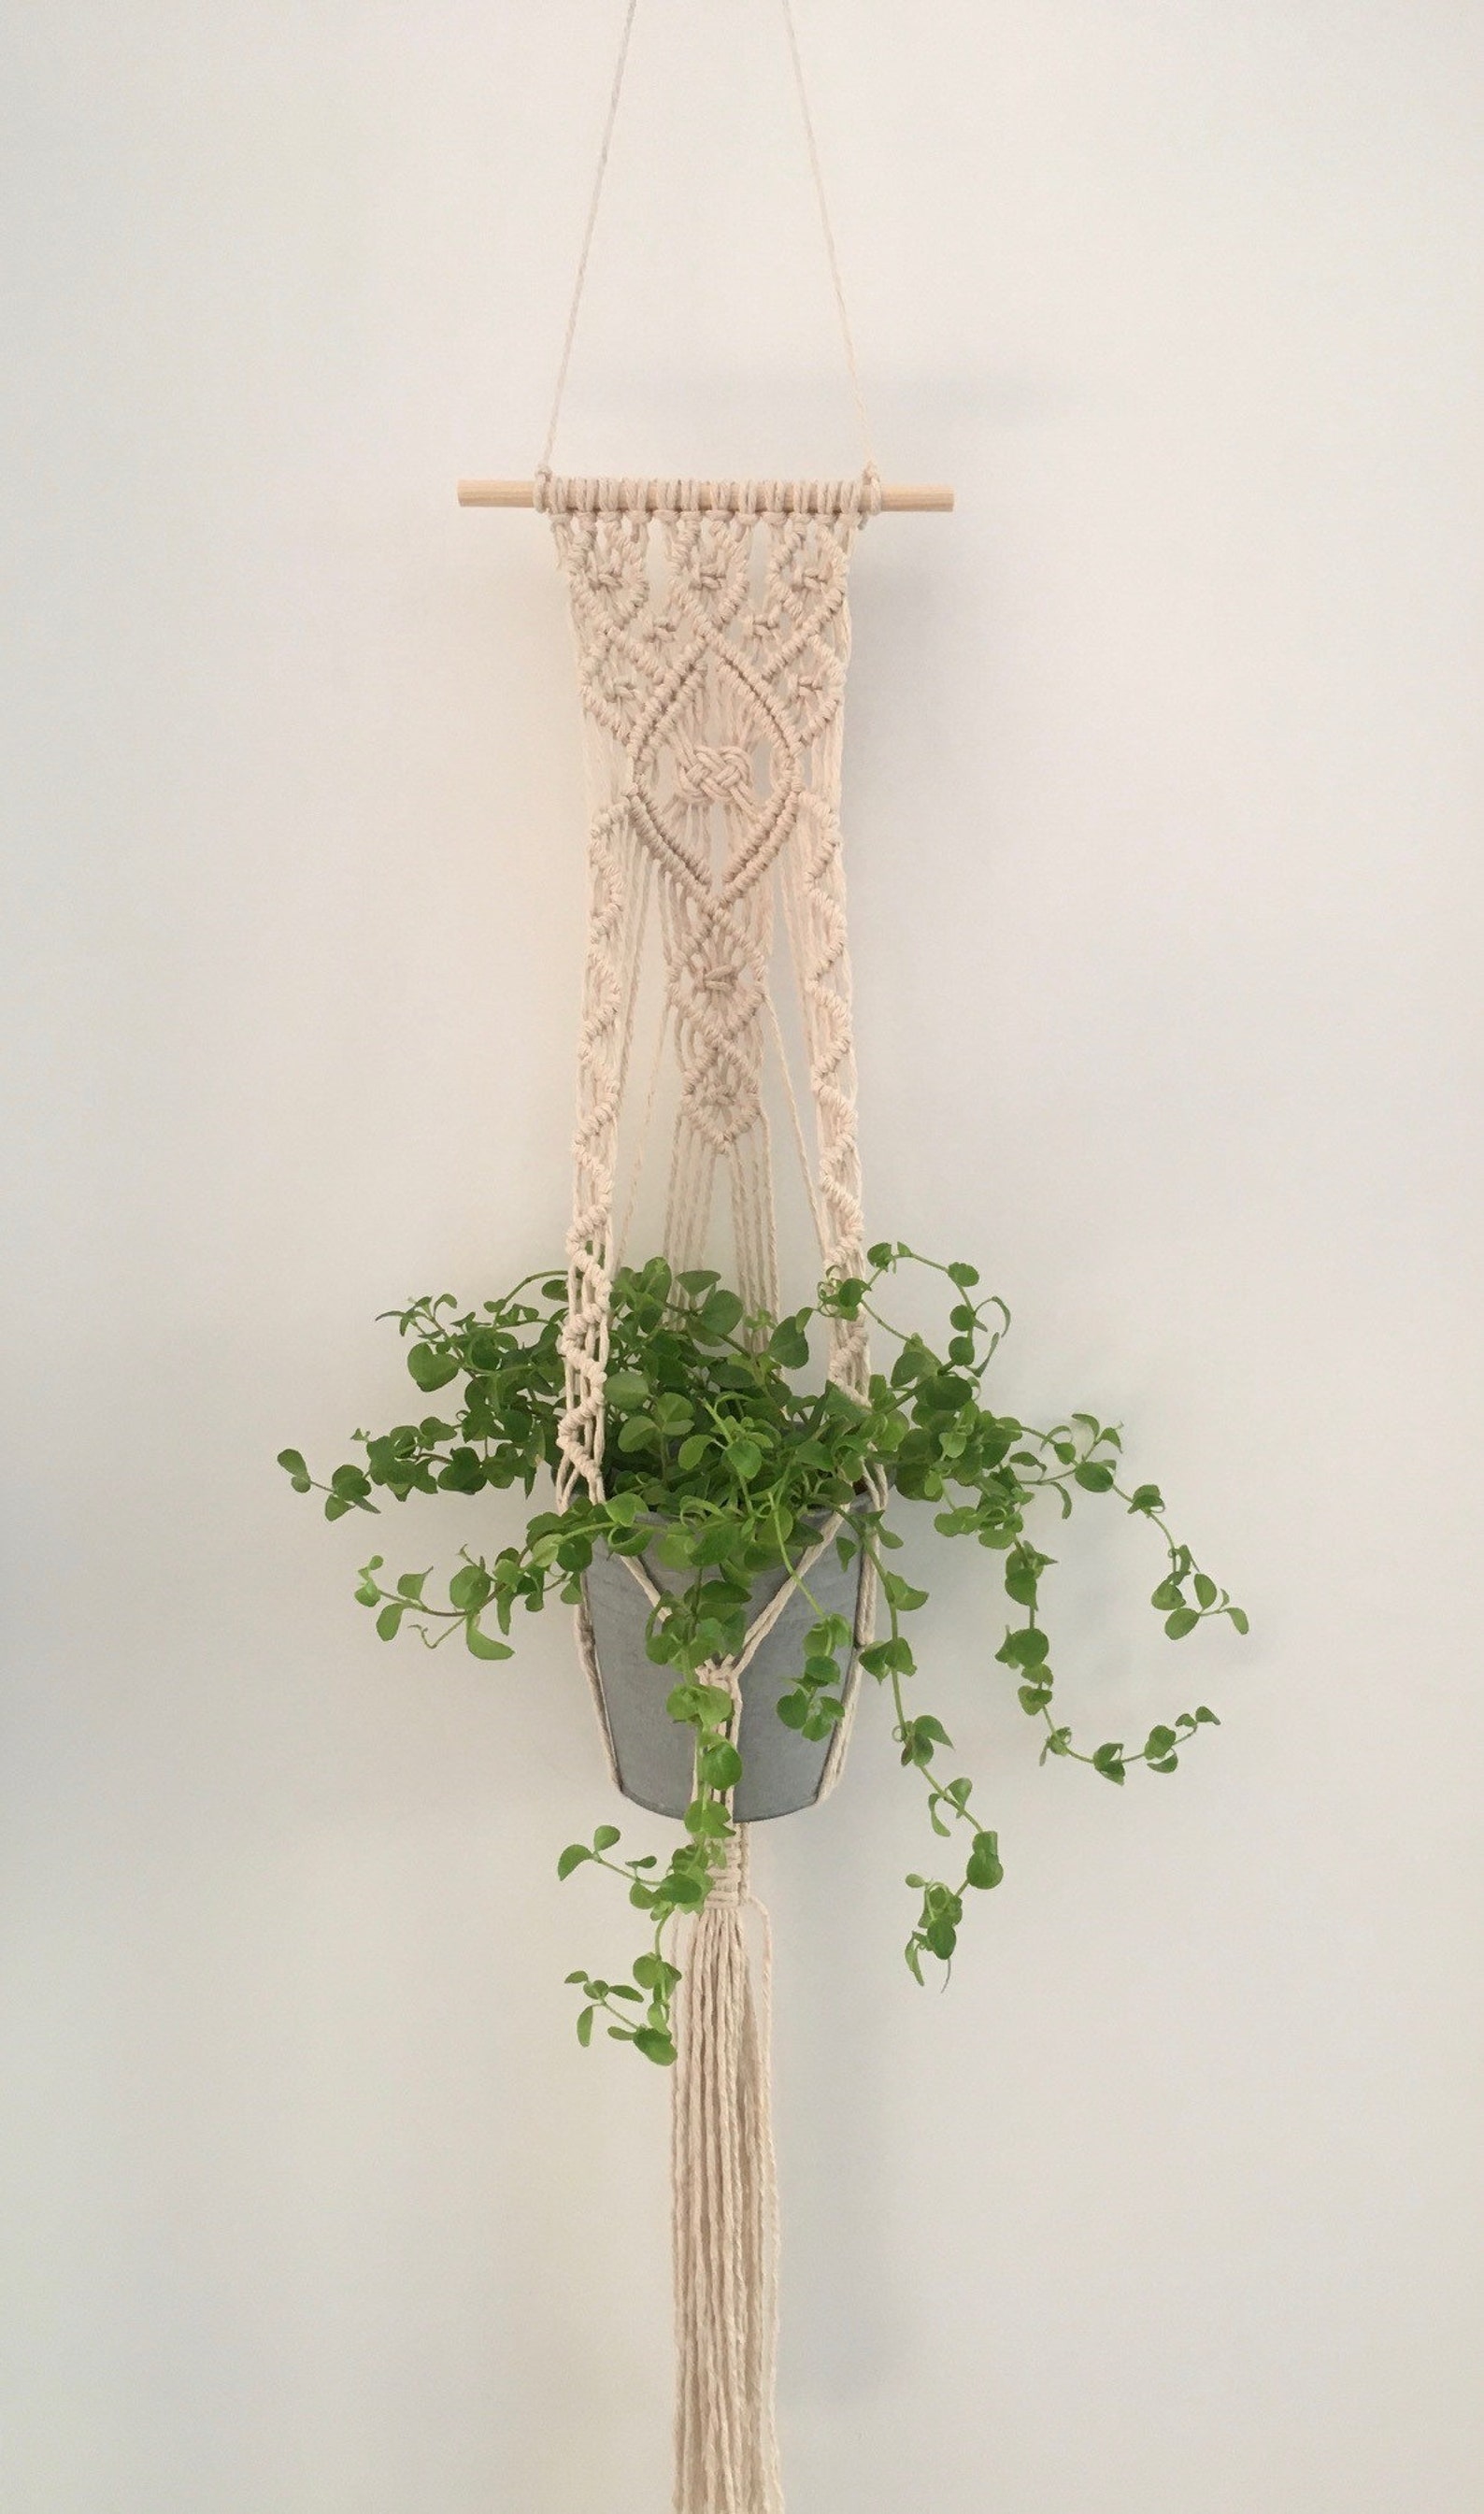 Macrame plant pendant wall planter light gray wall hanging | Etsy